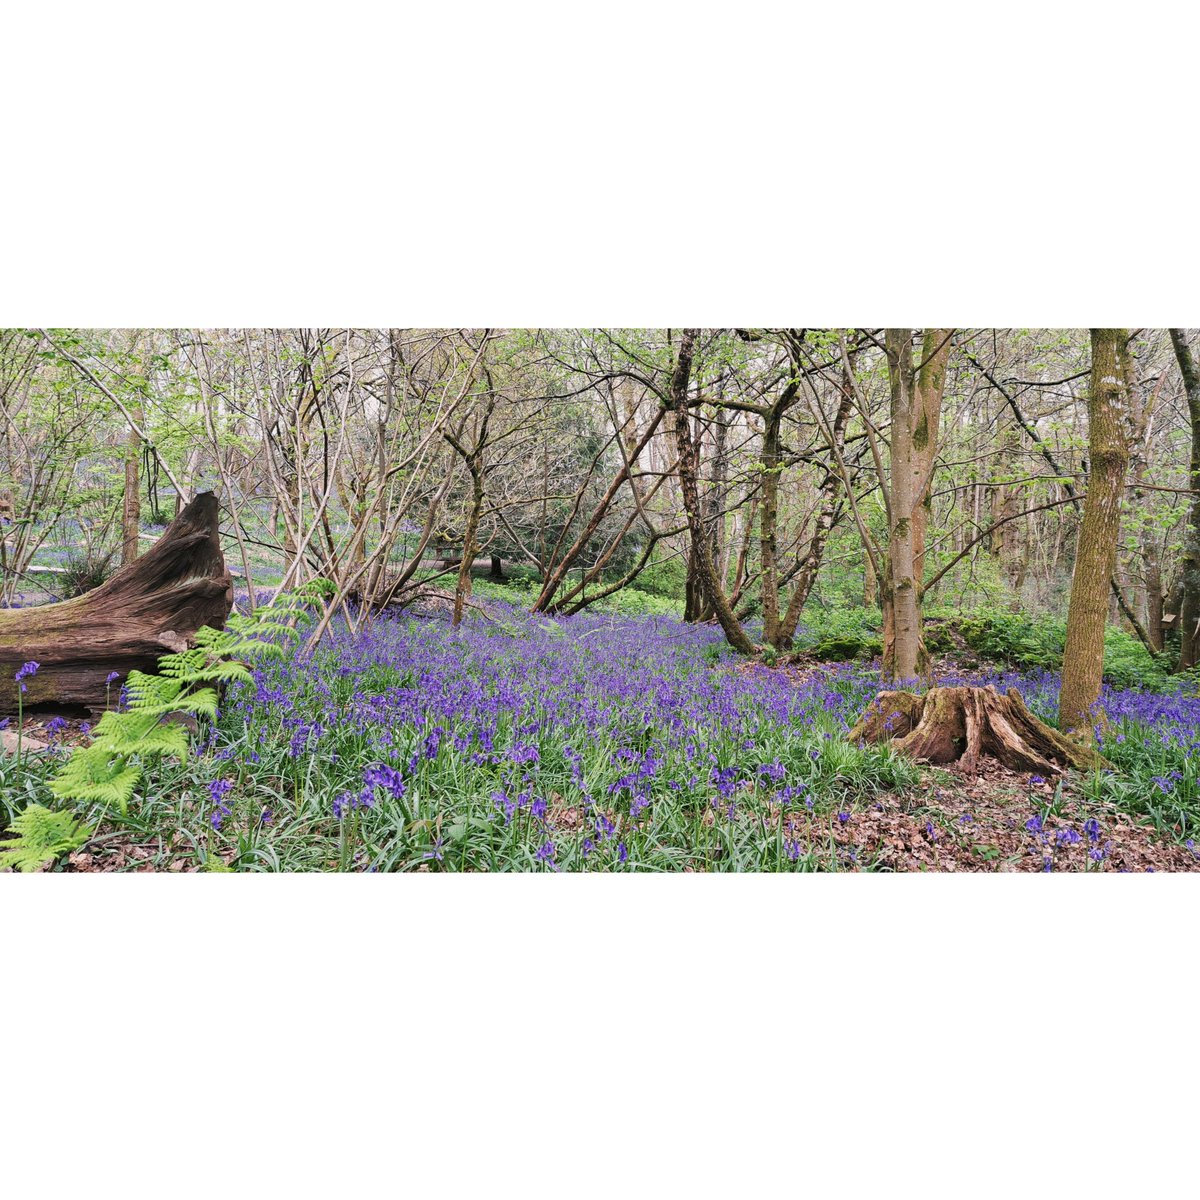 Blue Bell Woods 

#bluebells #bluebellwoods #bluebell #bluebellseason #woodlandphotography #naturephotography #springtime #ukphotography #standenhouseandgarden